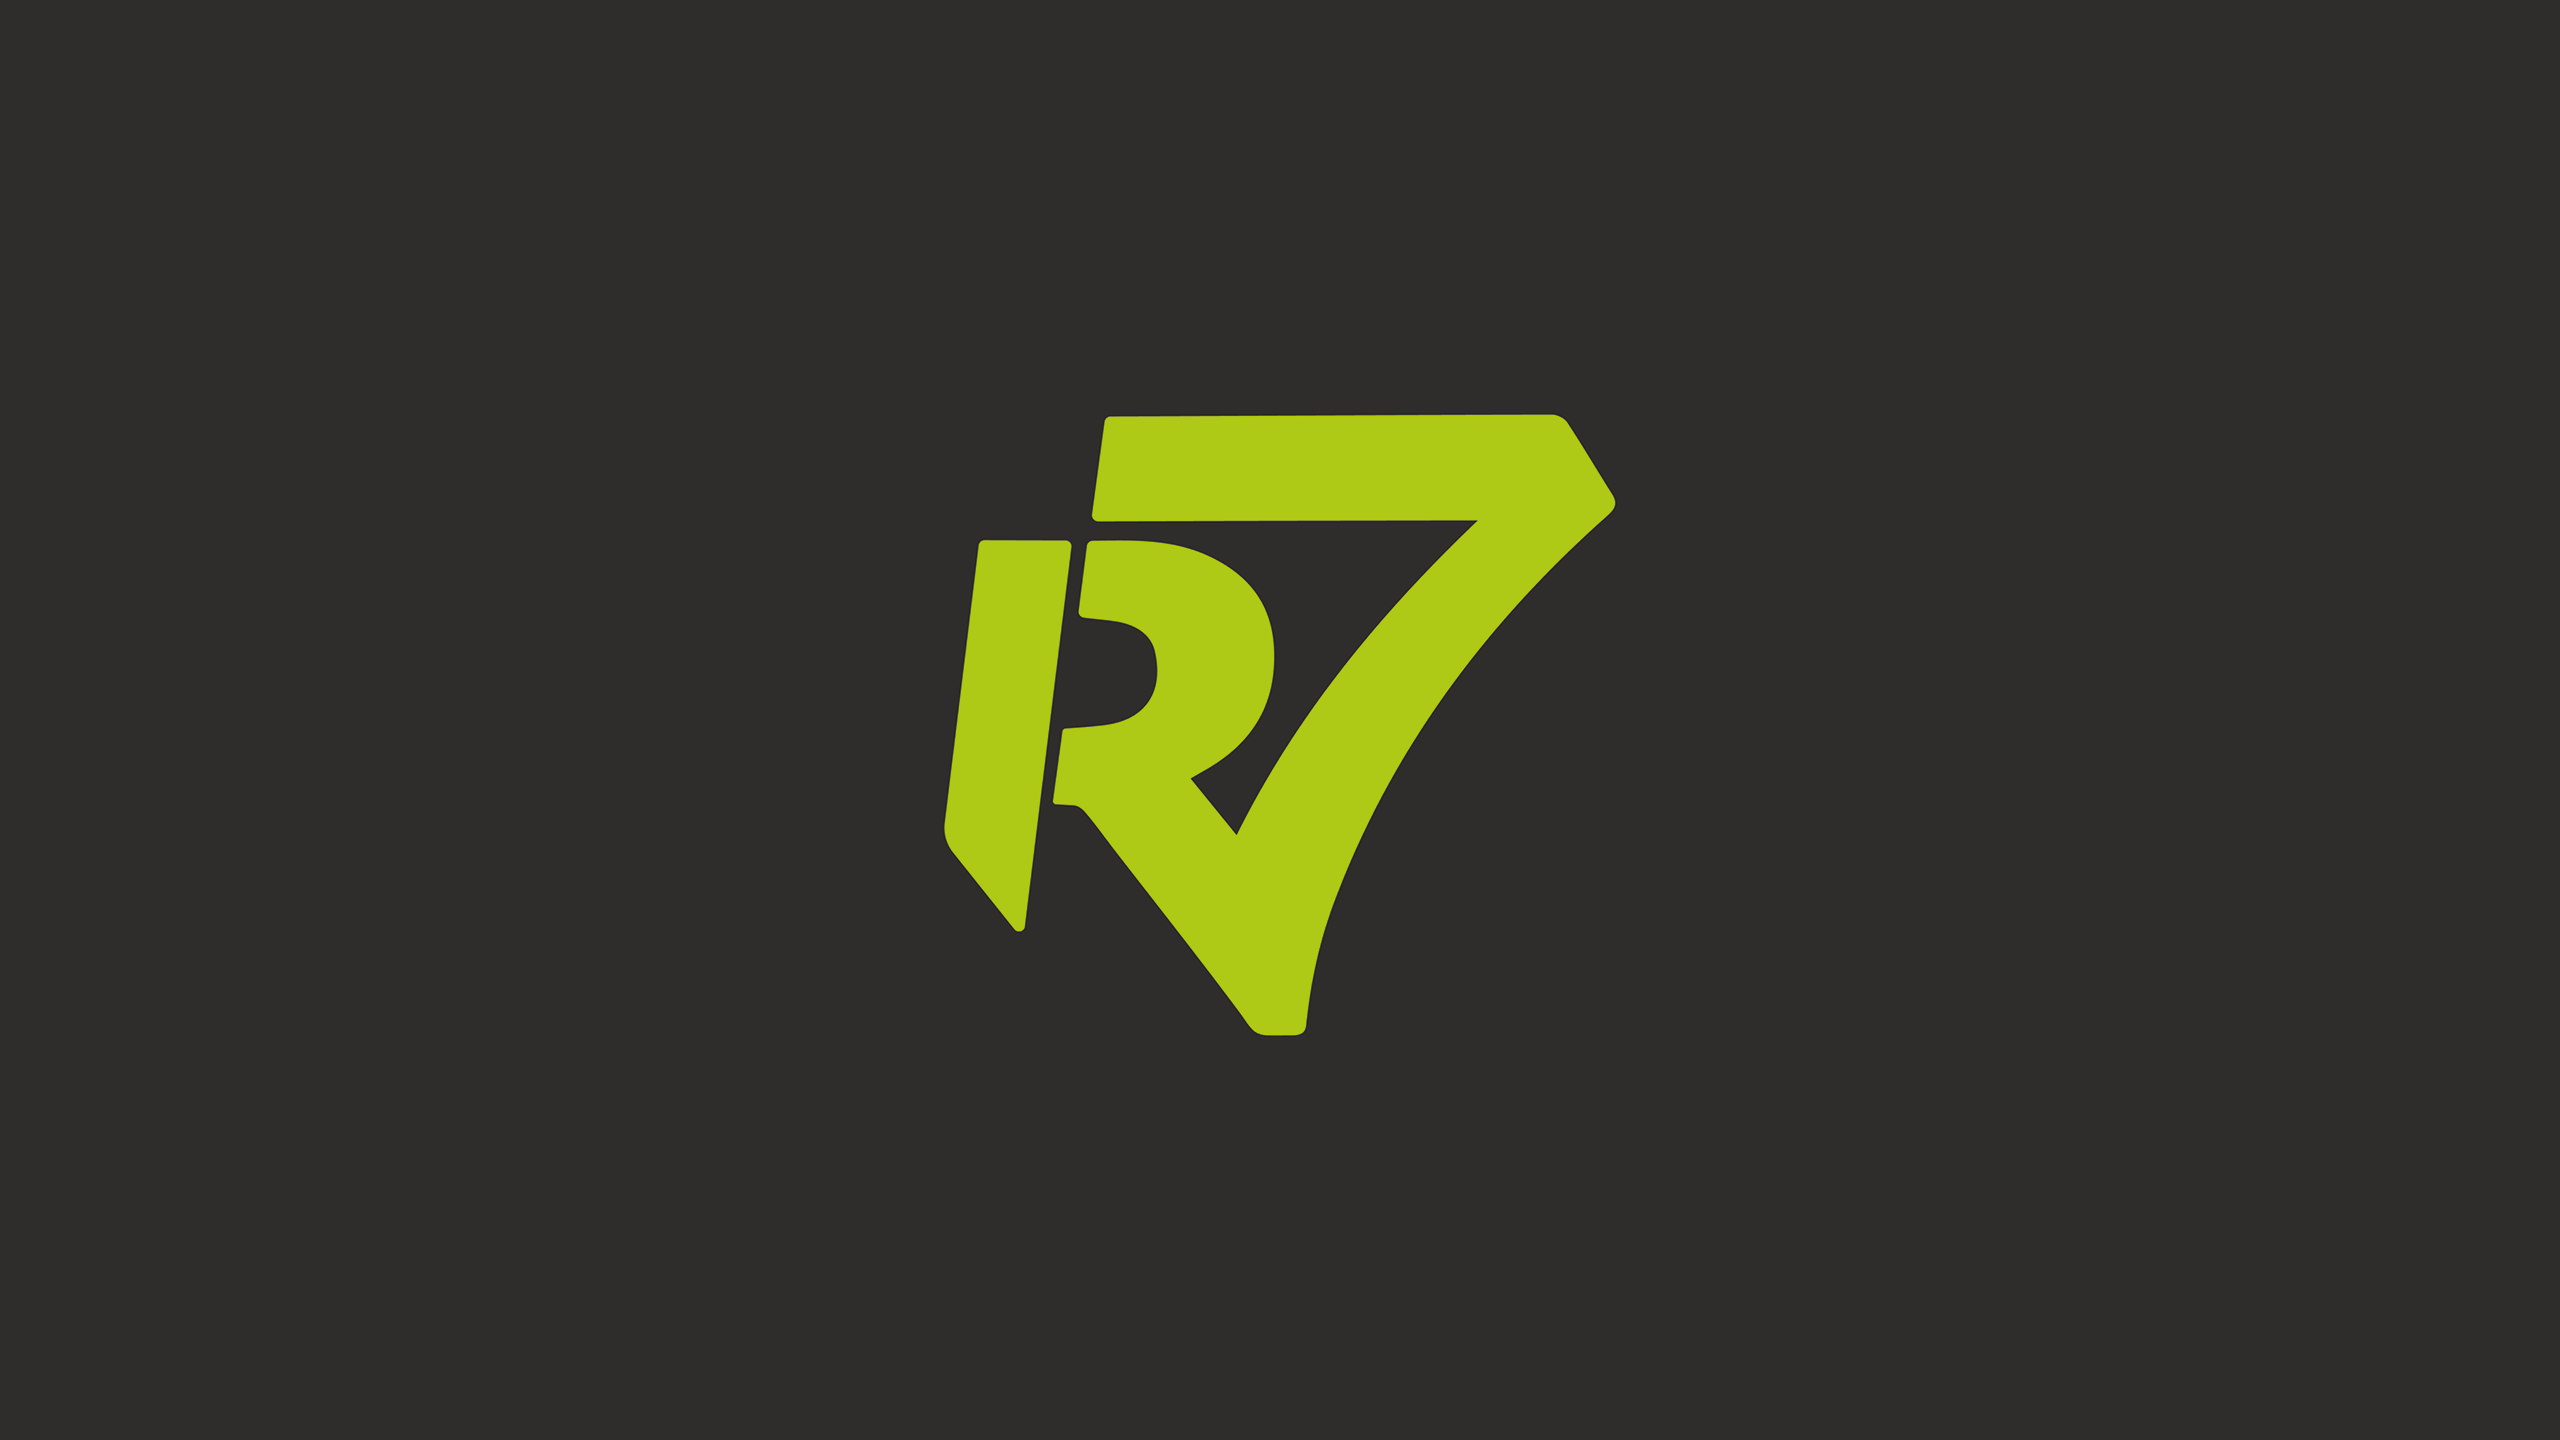 r7-logo-banner.png